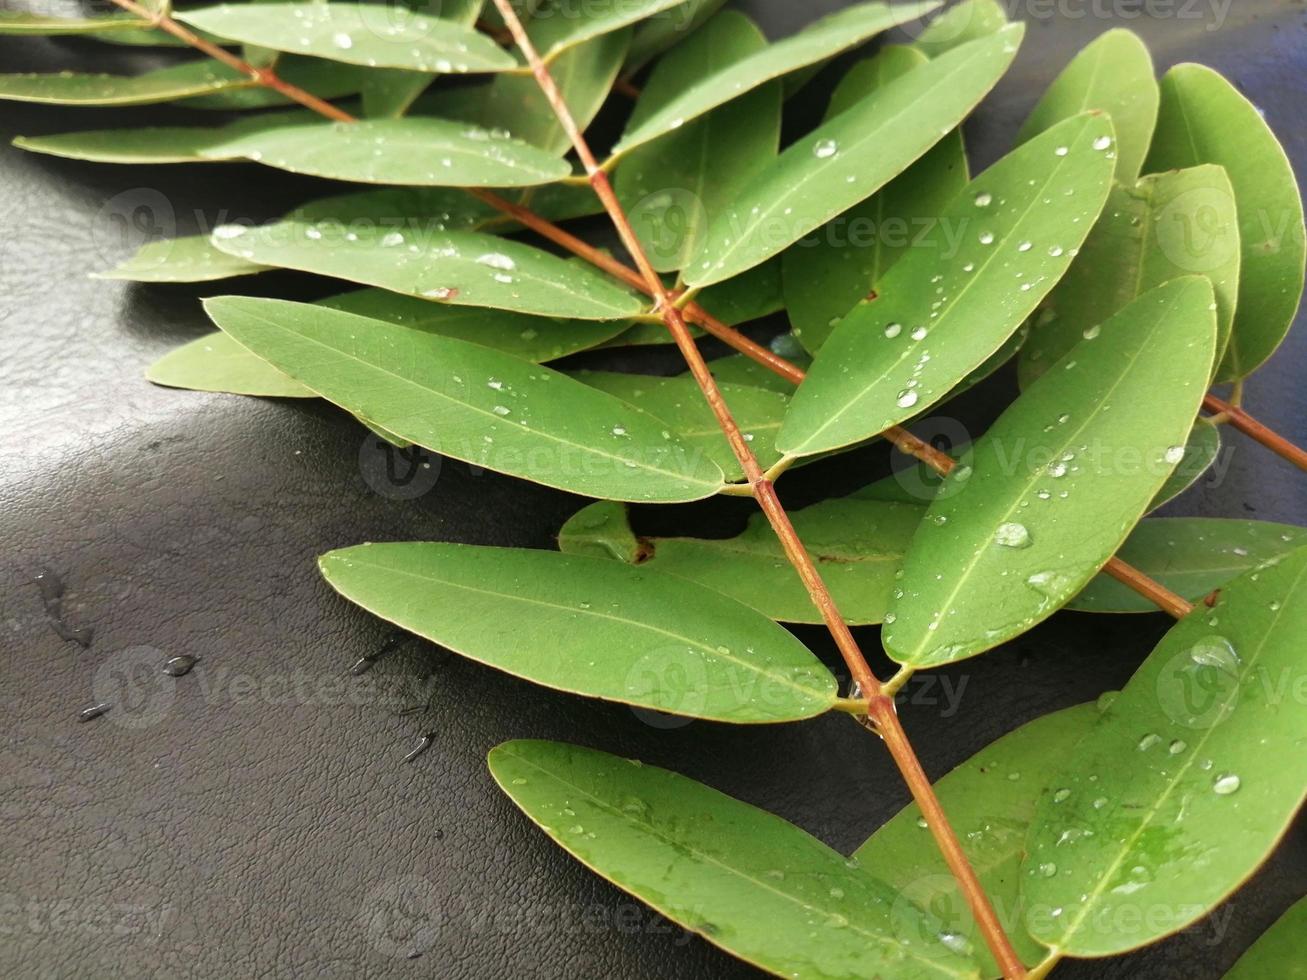 Senna siamea leaf with rain droplets on dark background, medical herb, Nature leaves photo